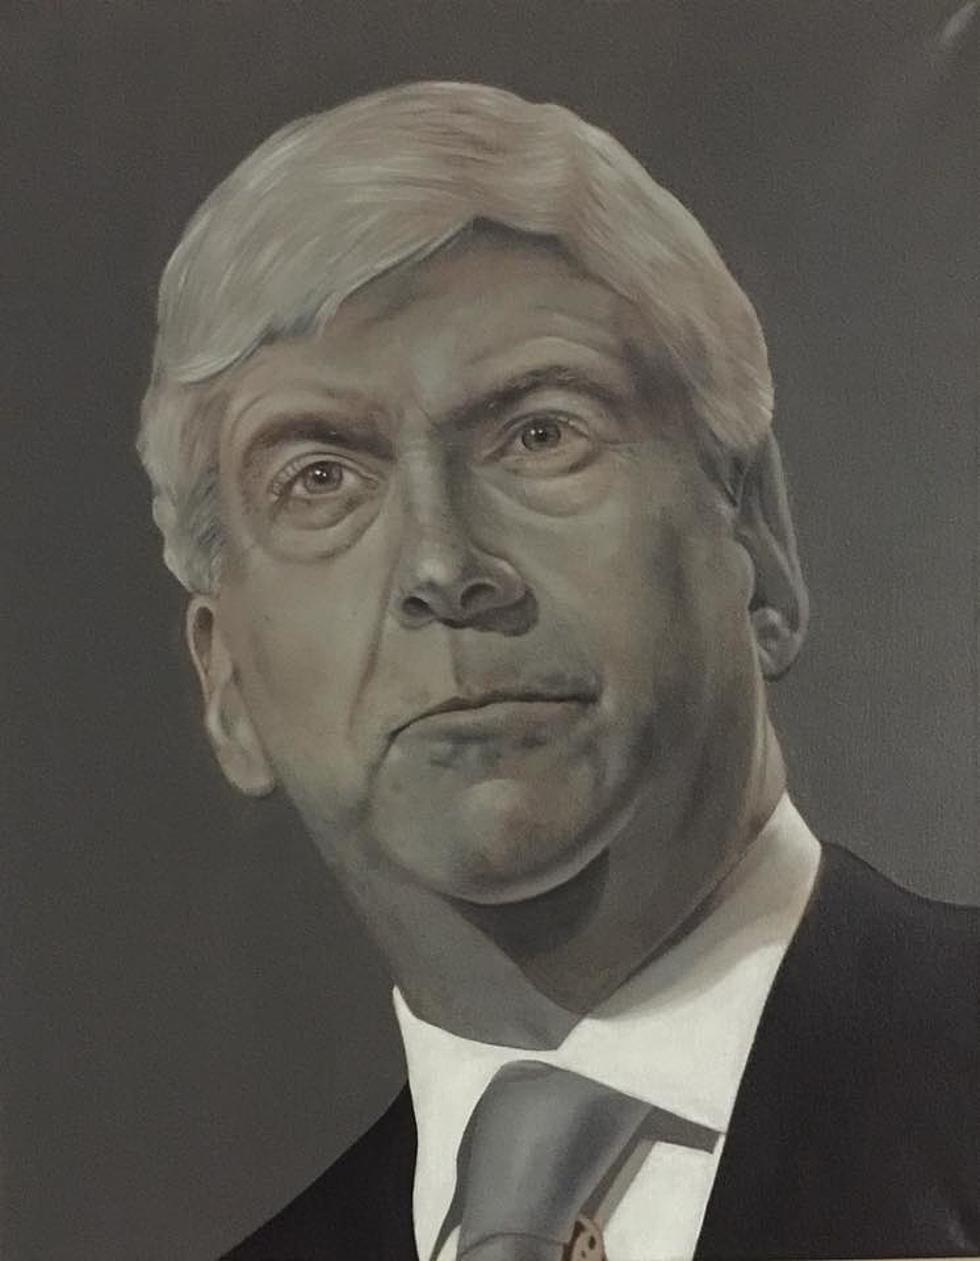 Ann Arbor Artist Paints Portrait of Governor Snyder with Lead Paint [VIDEO]